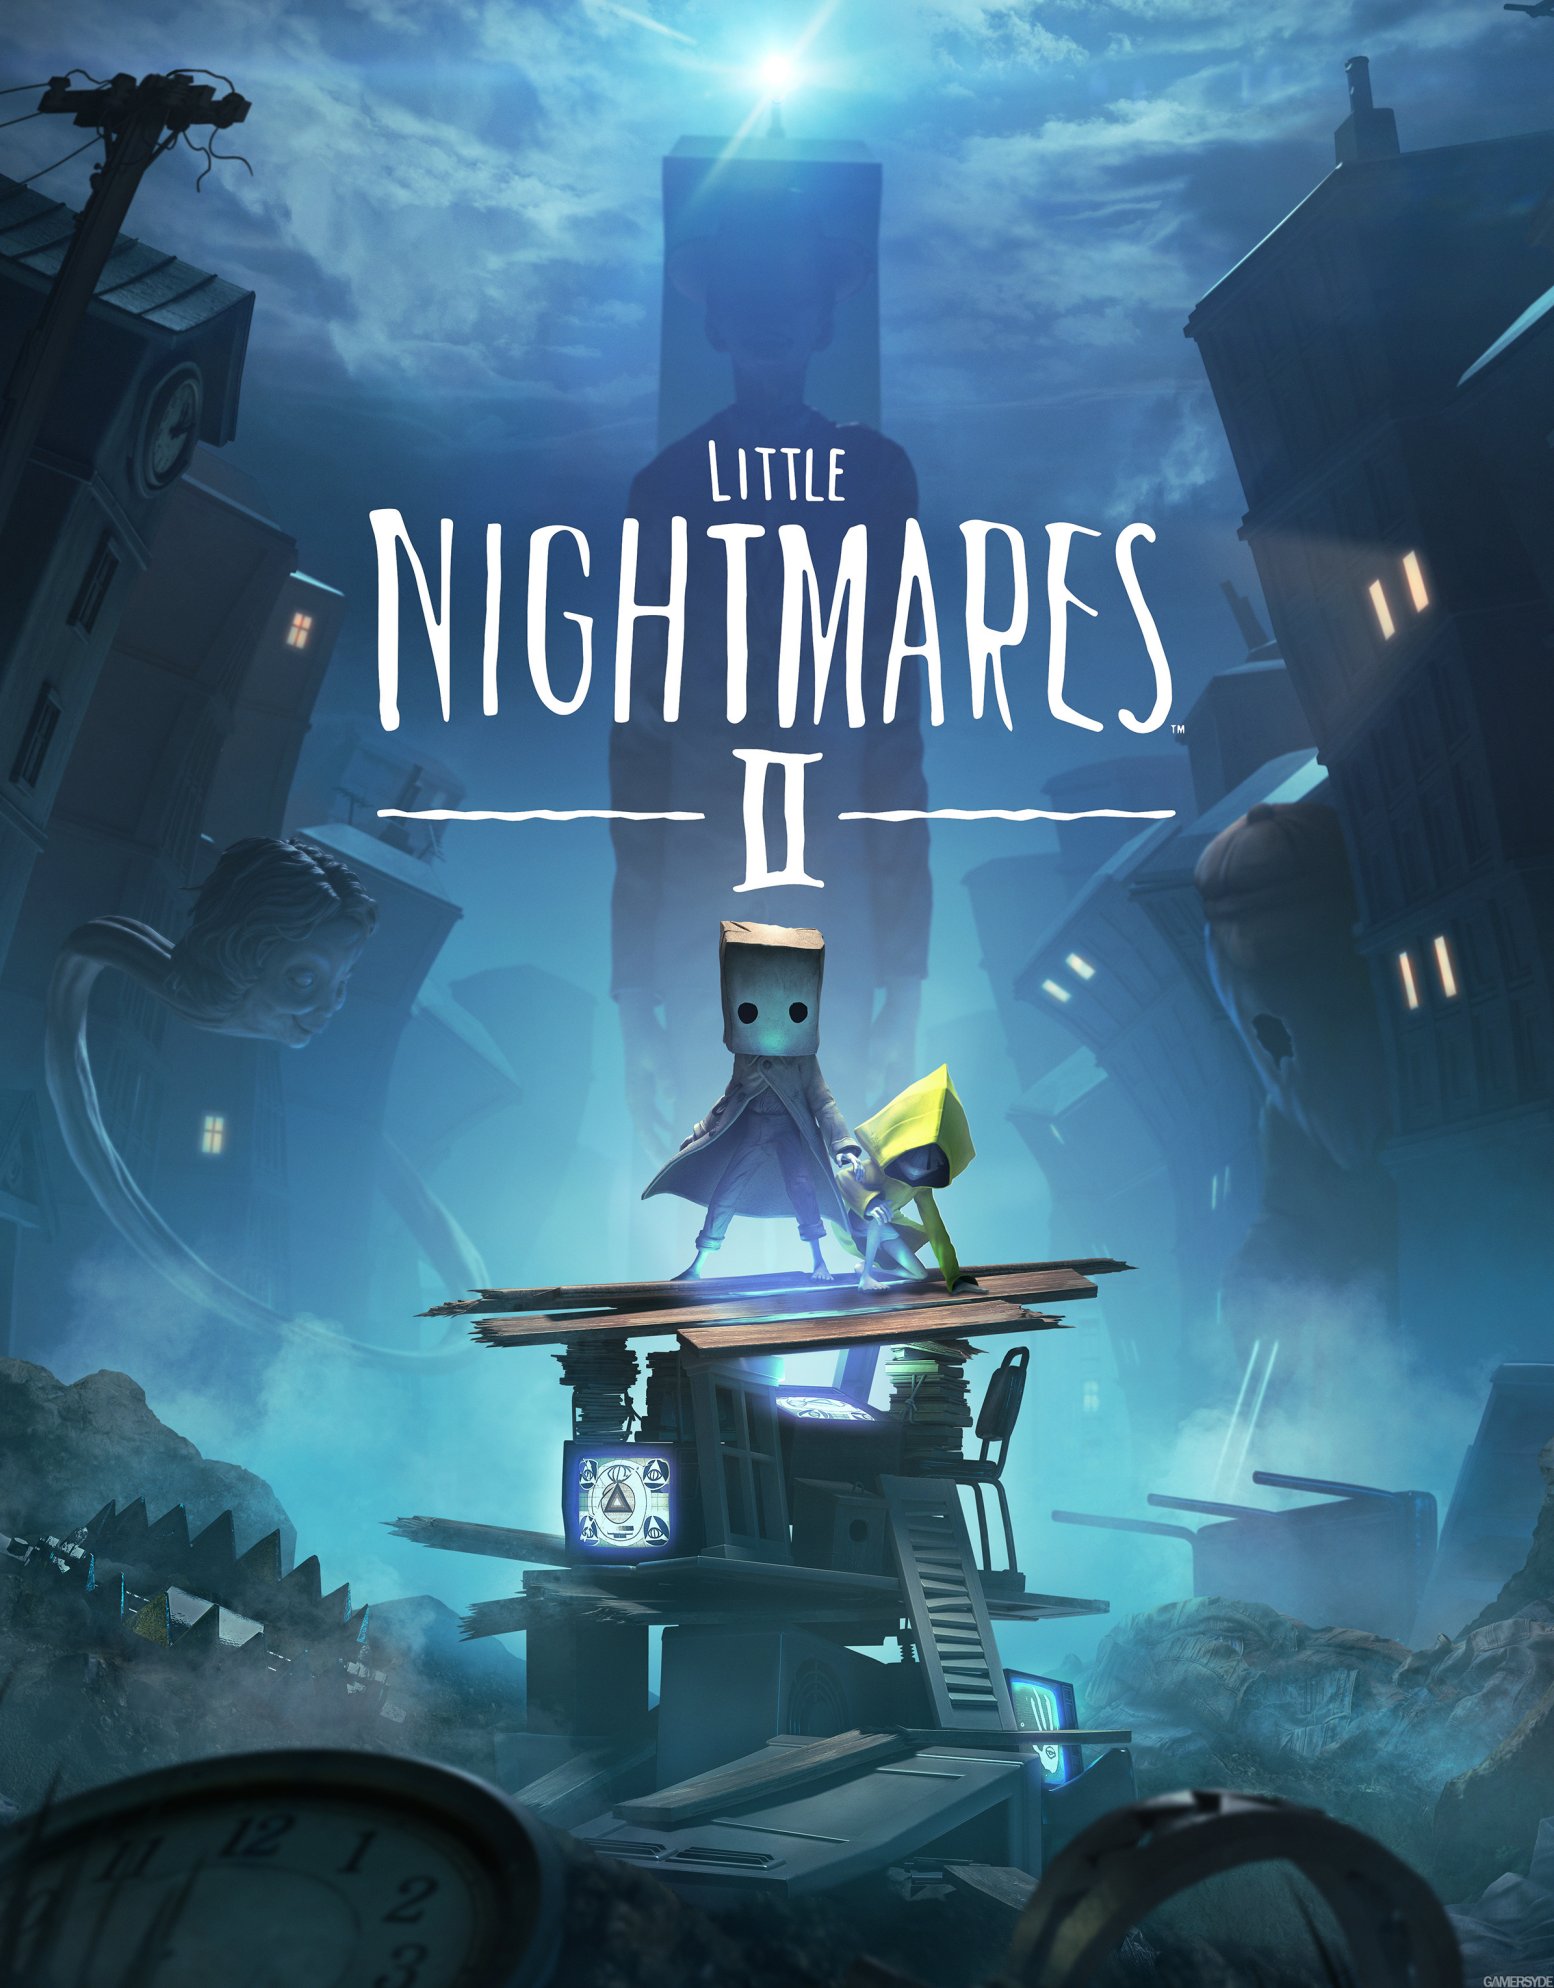 Little Nightmares II (2020) - Game details | Adventure Gamers